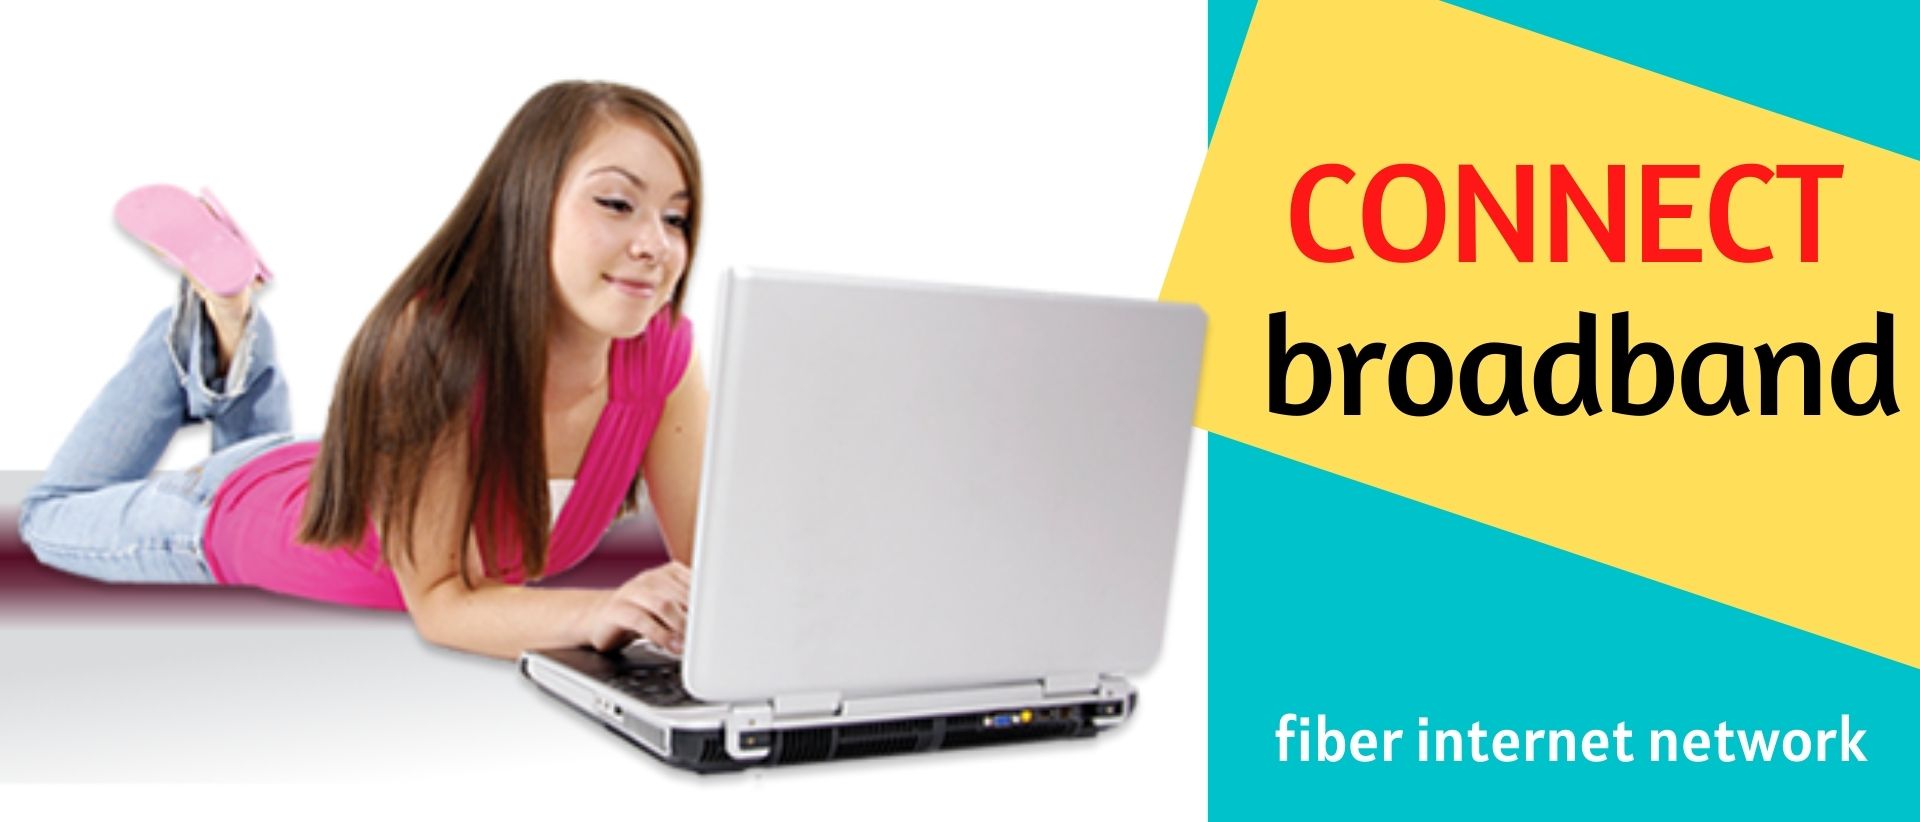 Connect broadband fiber internet